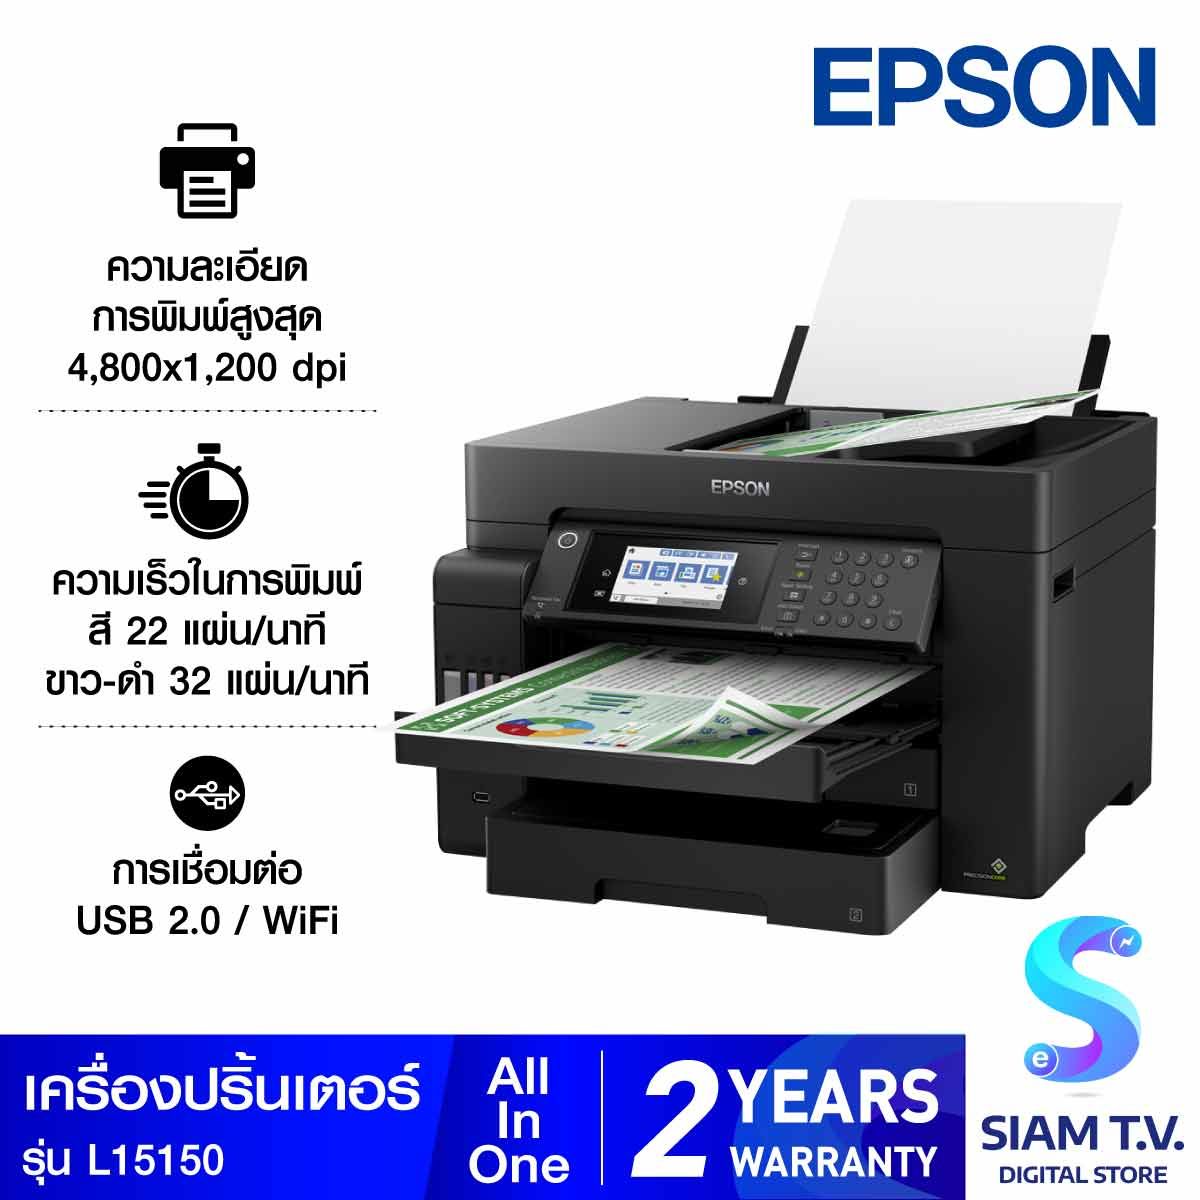 PRINTER (เครื่องพิมพ์) EPSON ECOTANK L15150 A3 WI-FI DUPLEX ALL-IN-ONE INK TANK PRINTER